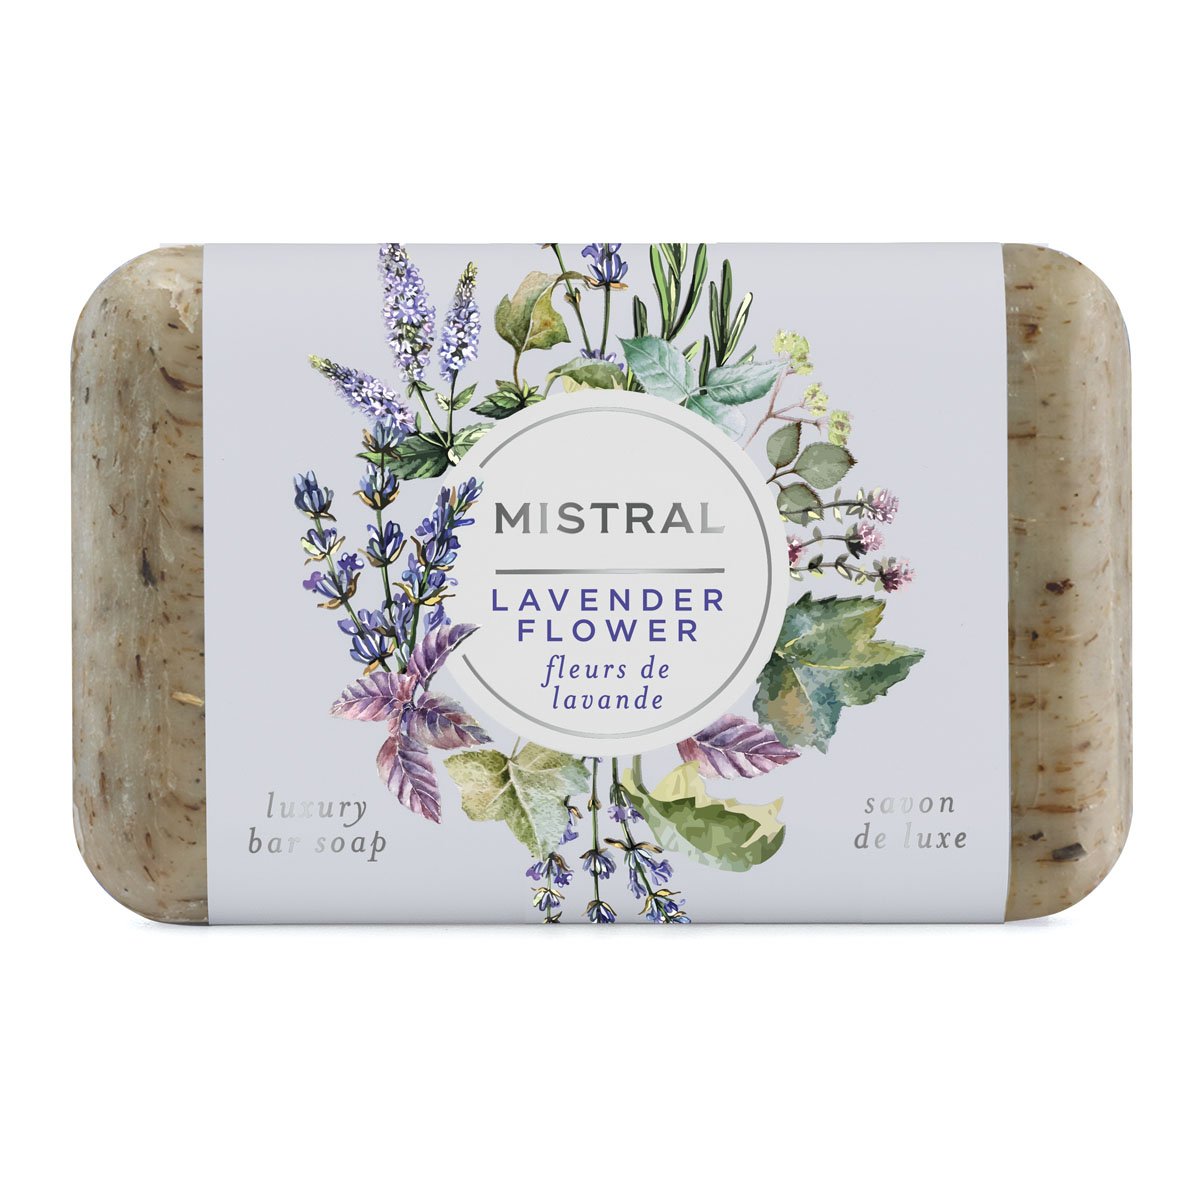 Mistral Classic Lavender Flower Soap 7oz bar